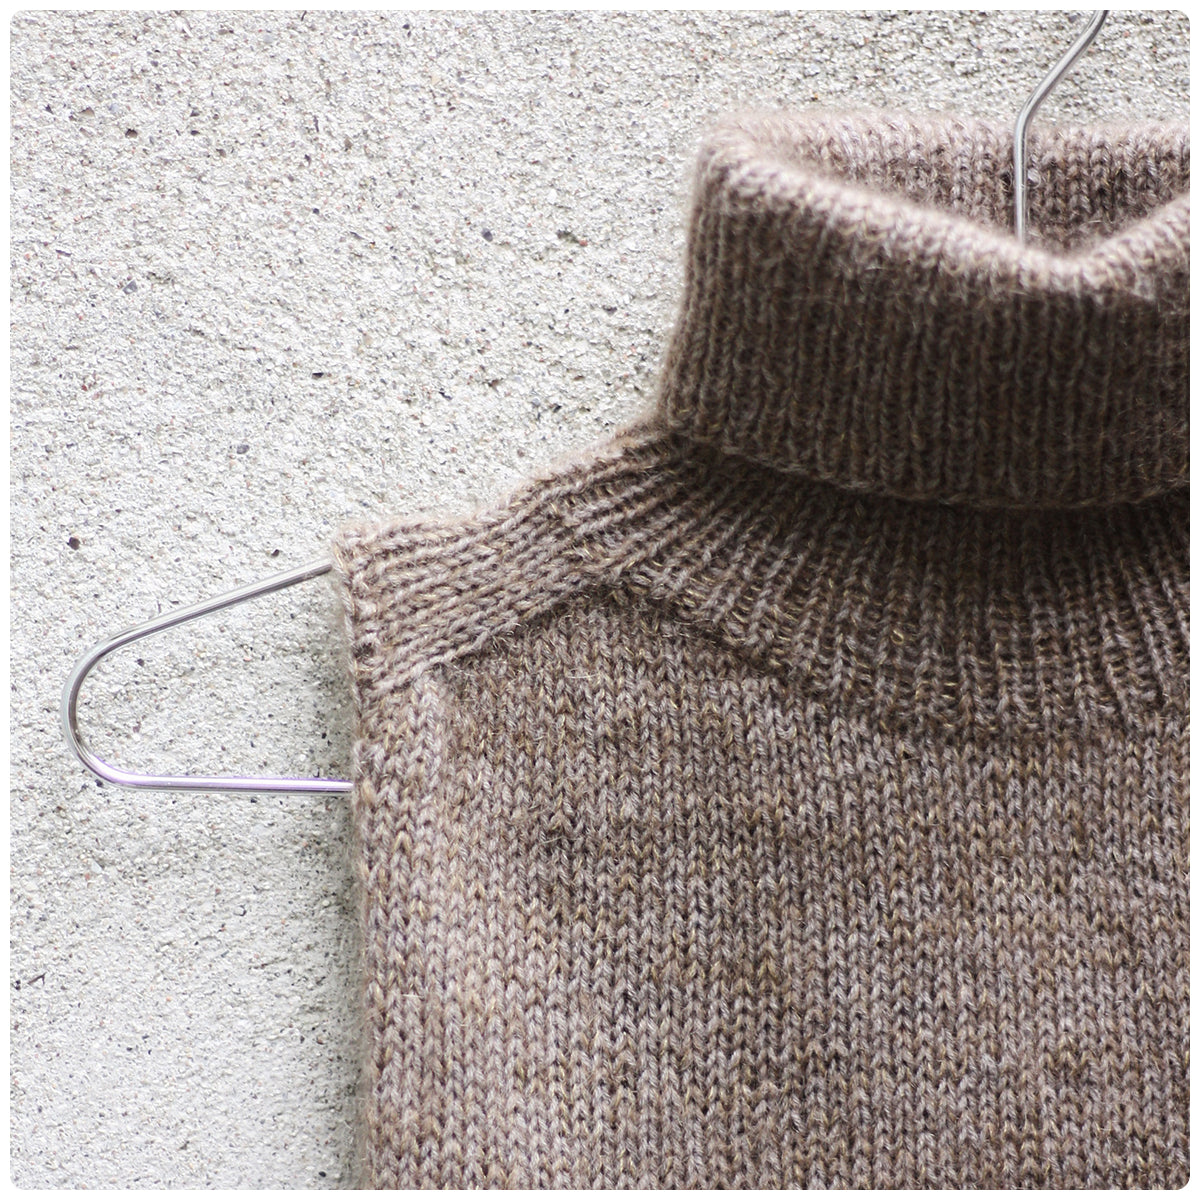 Knitting for Olive by Pernille Larsen